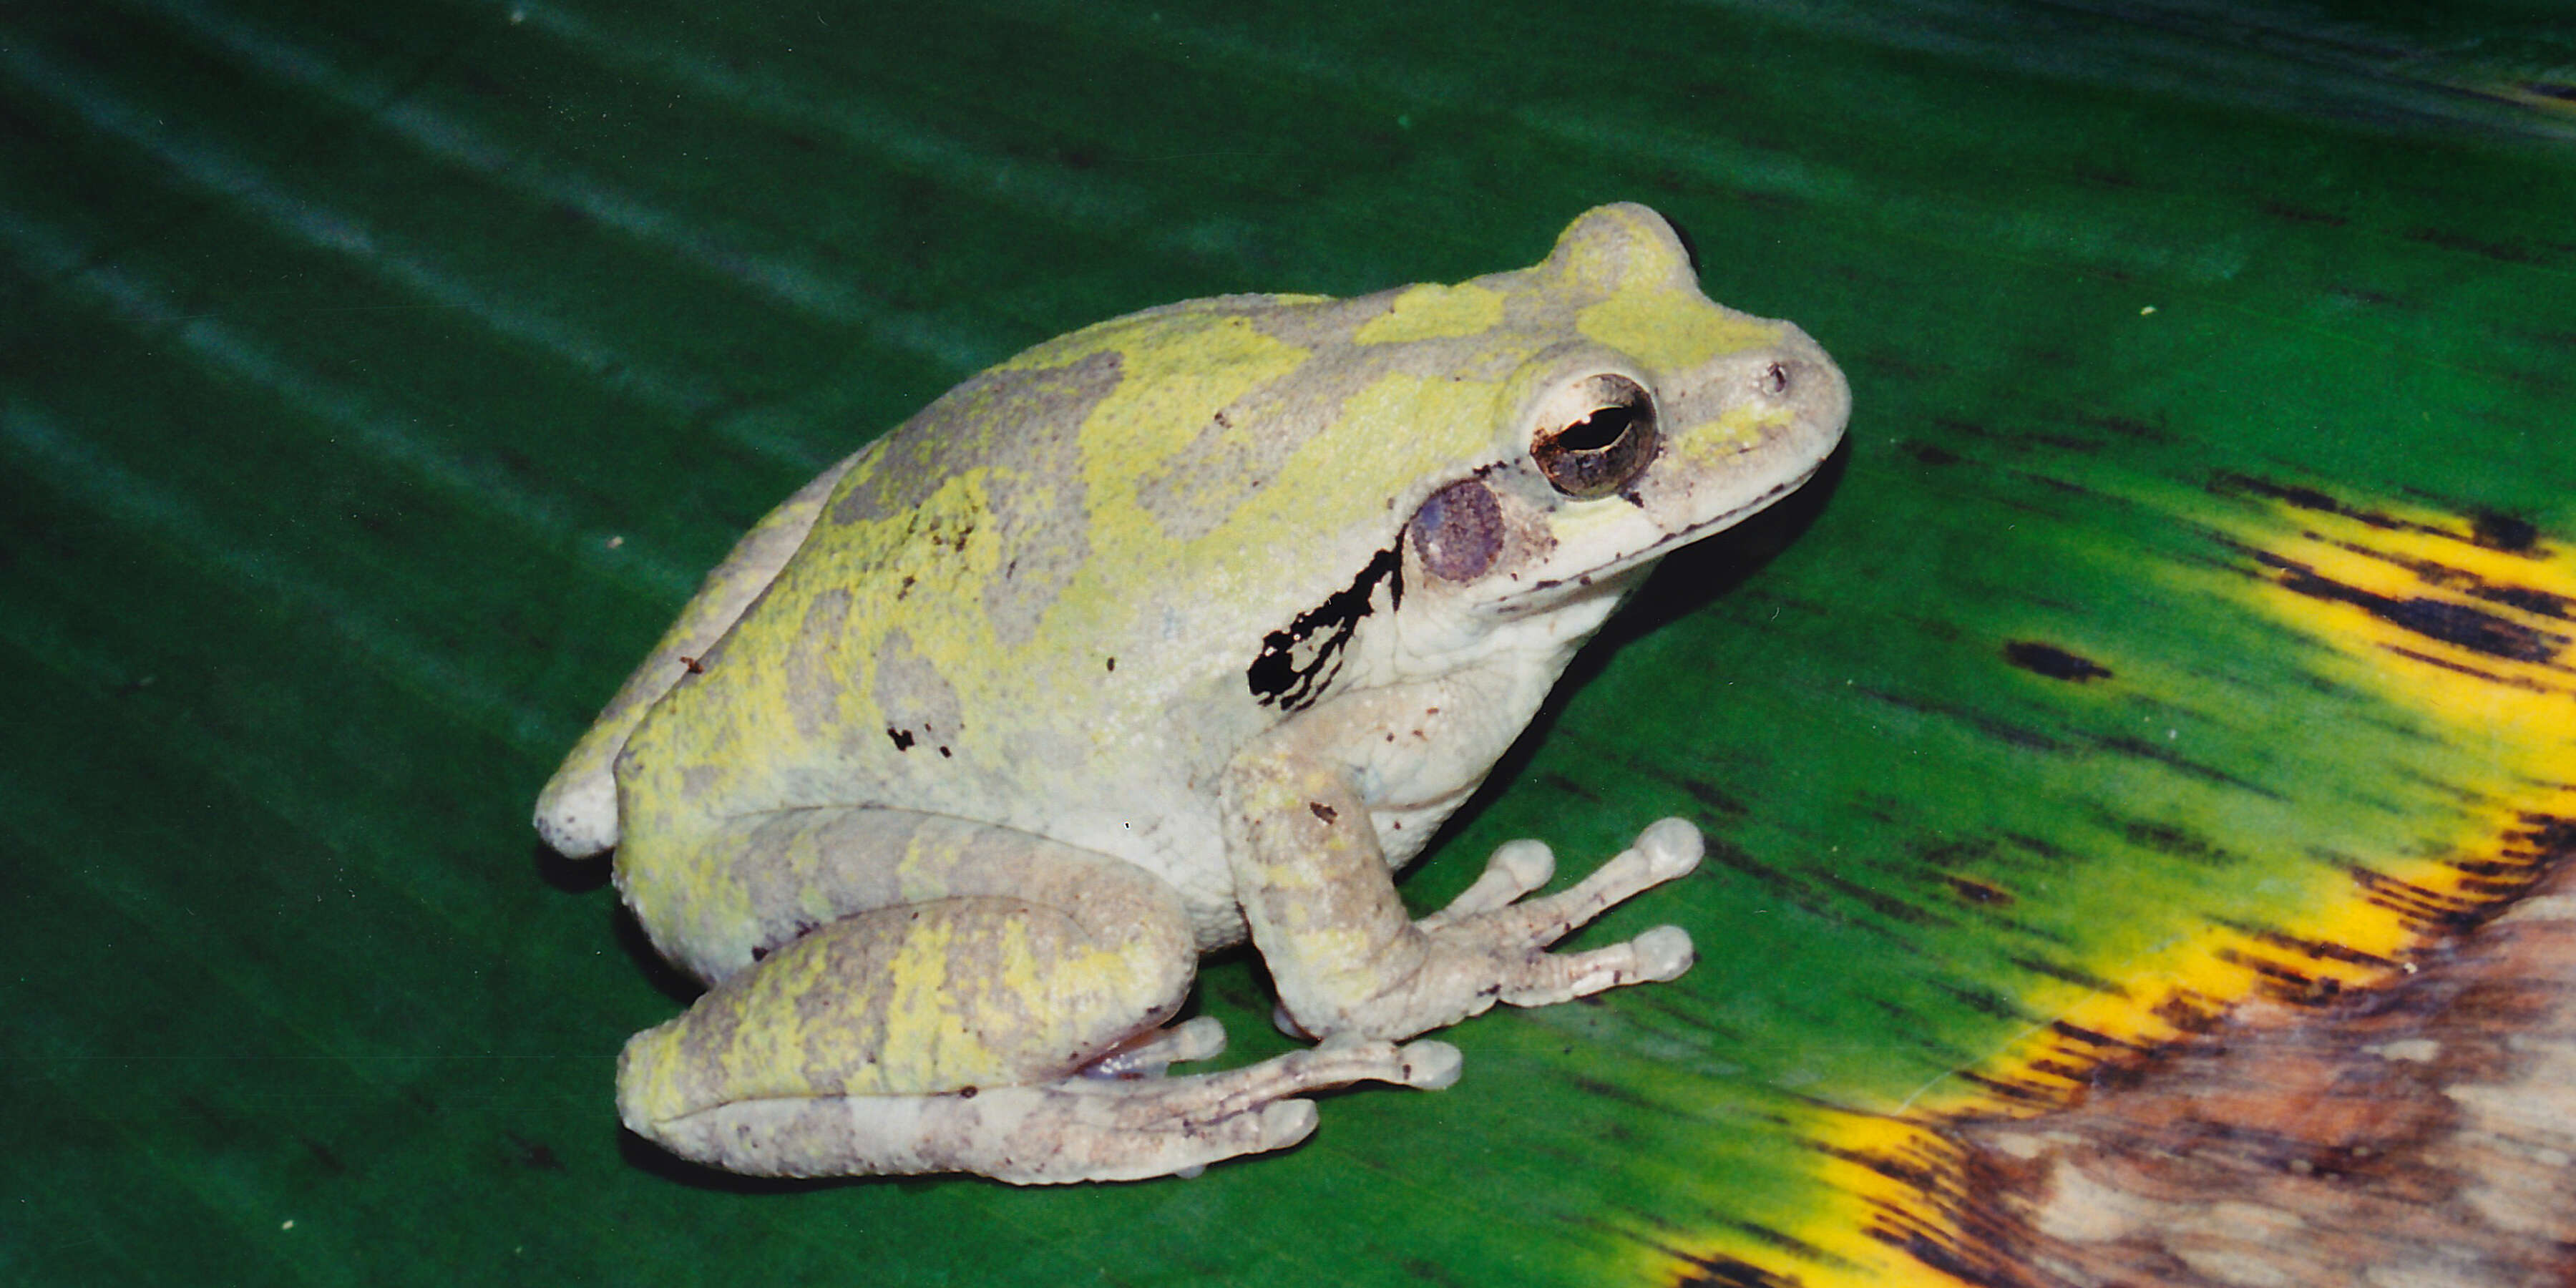 Image of Baudin's Treefrog